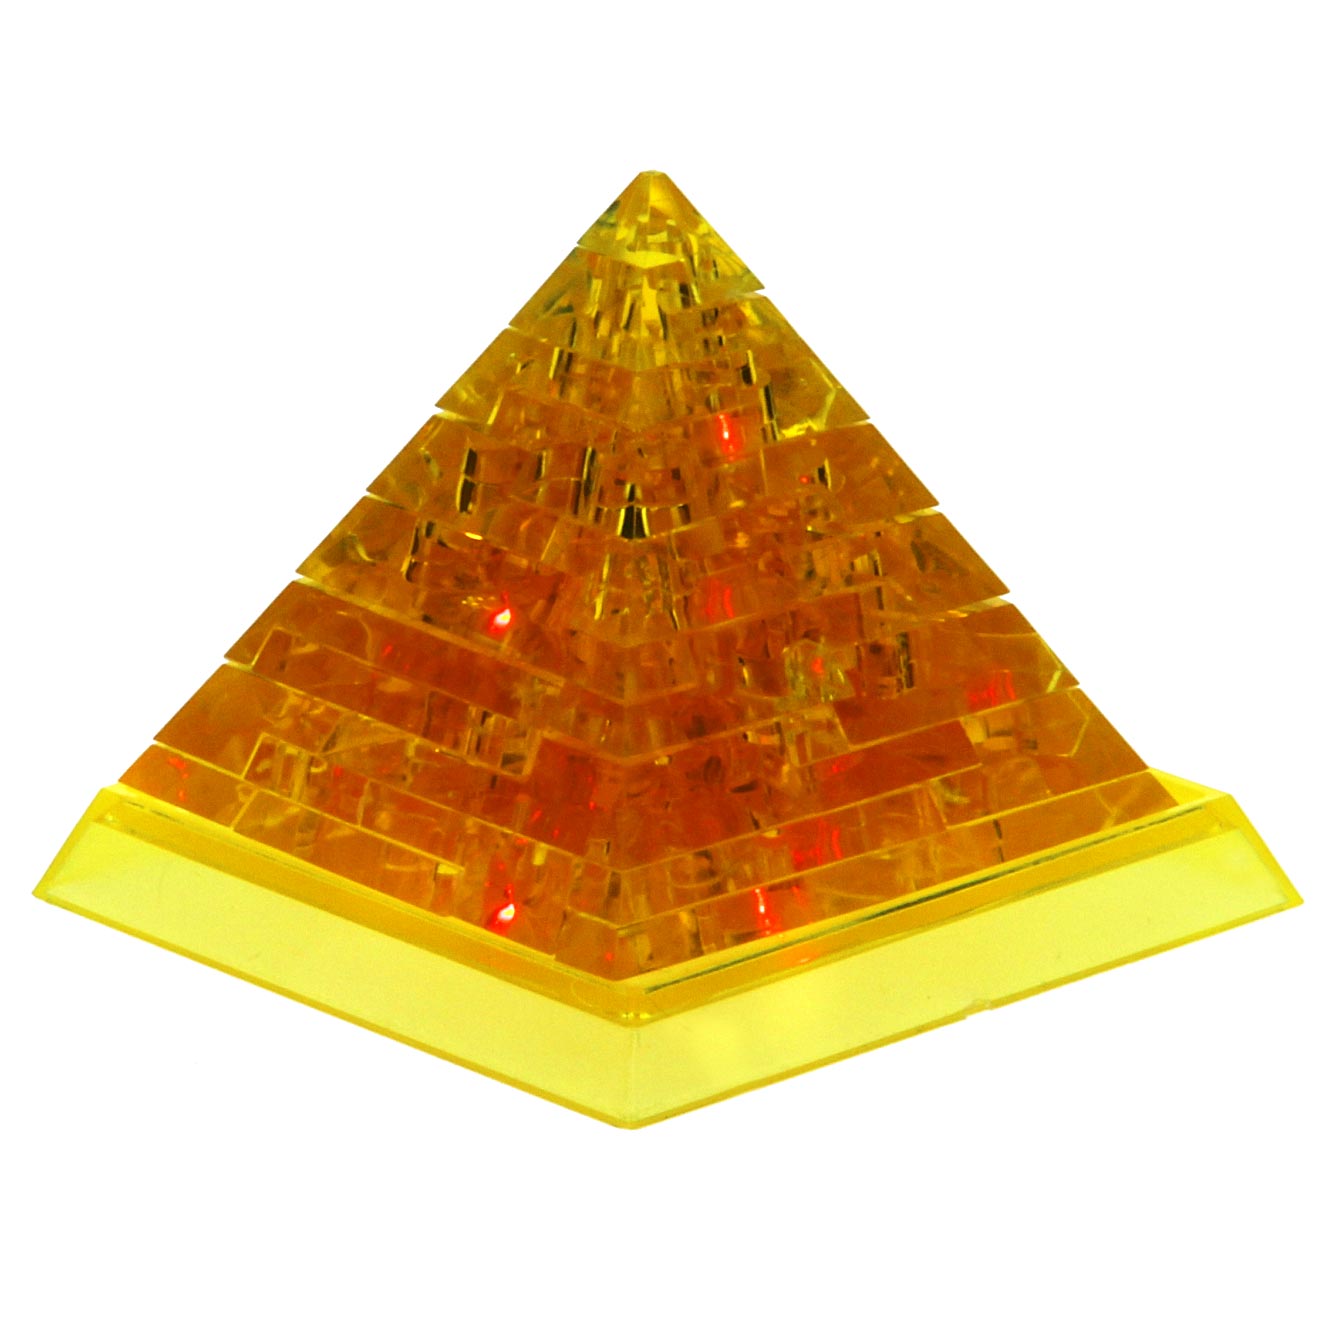 3D Puzzel Kristal Piramide